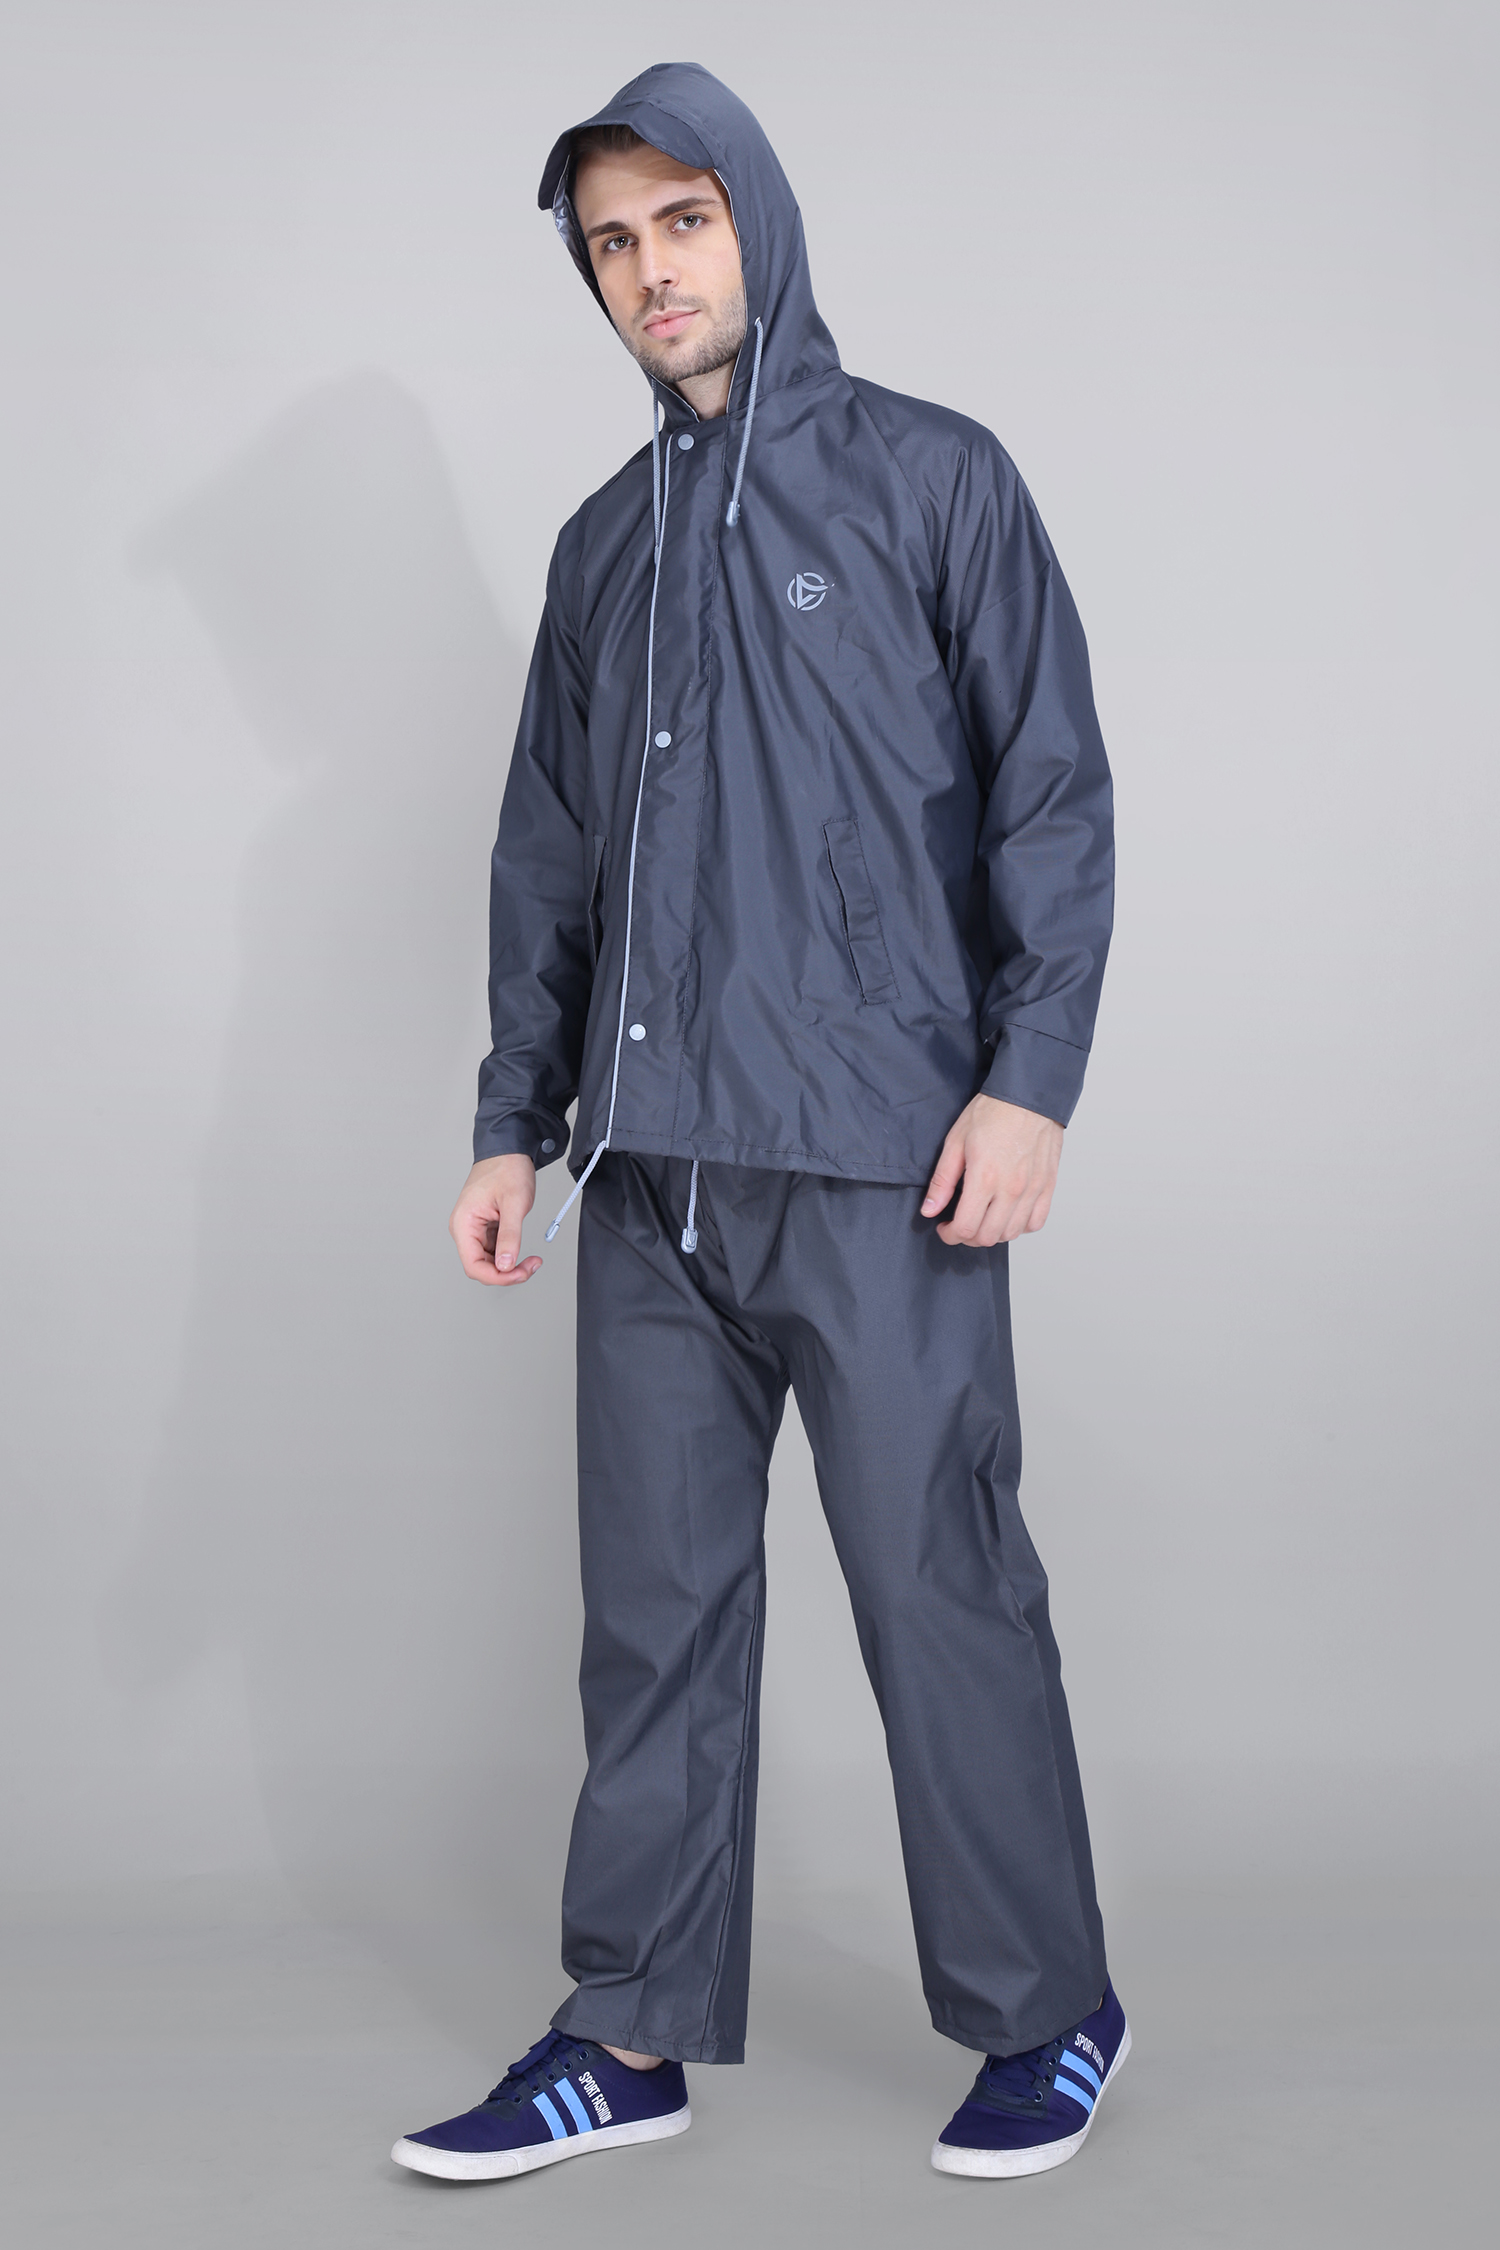 Reversible Double-Layered Rain Suit for Men - 1160 - Grey, XL